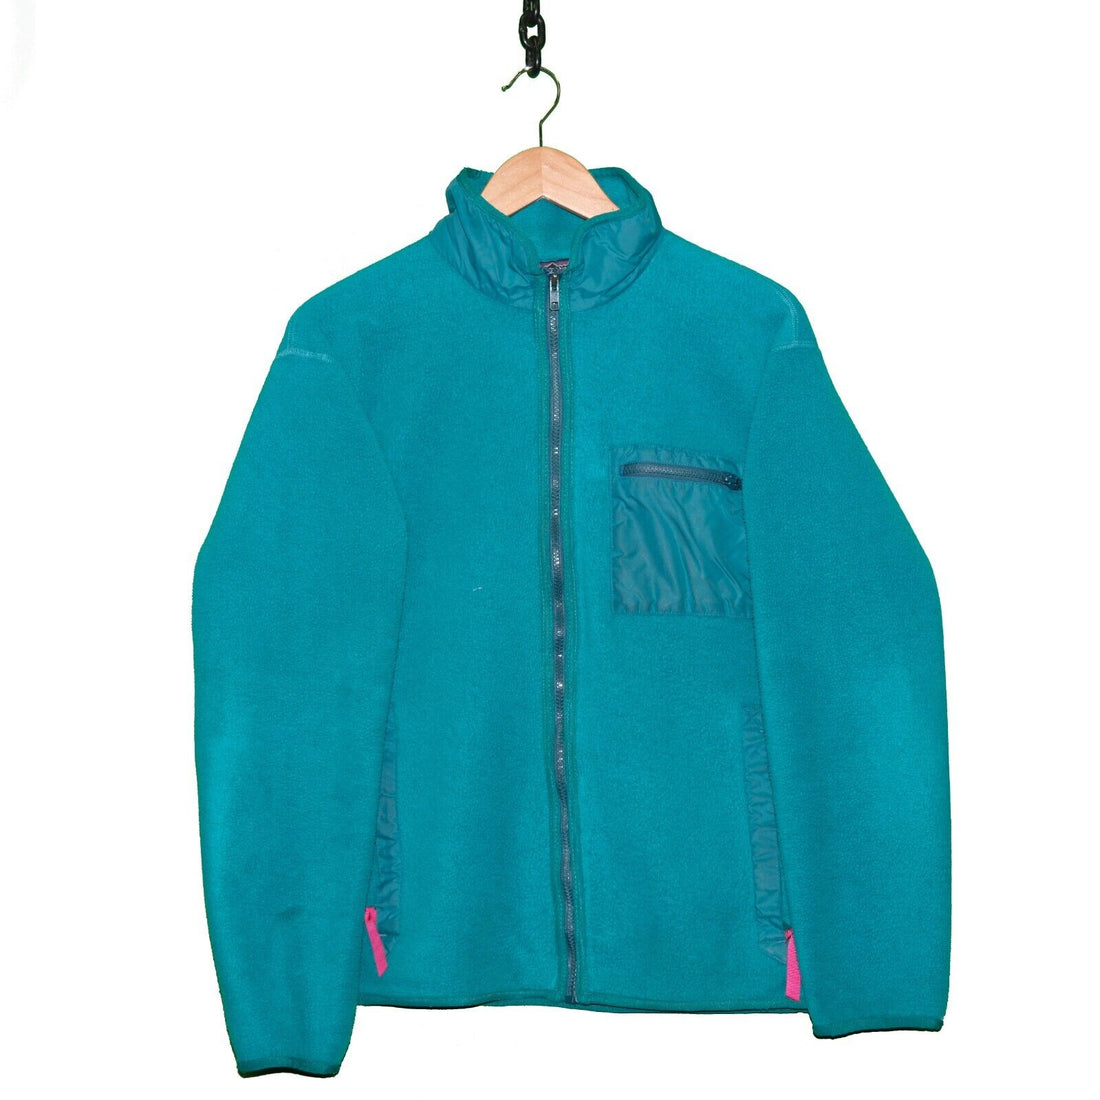 Vintage Patagonia Fleece Jacket Size Medium Teal 90s Full Zip